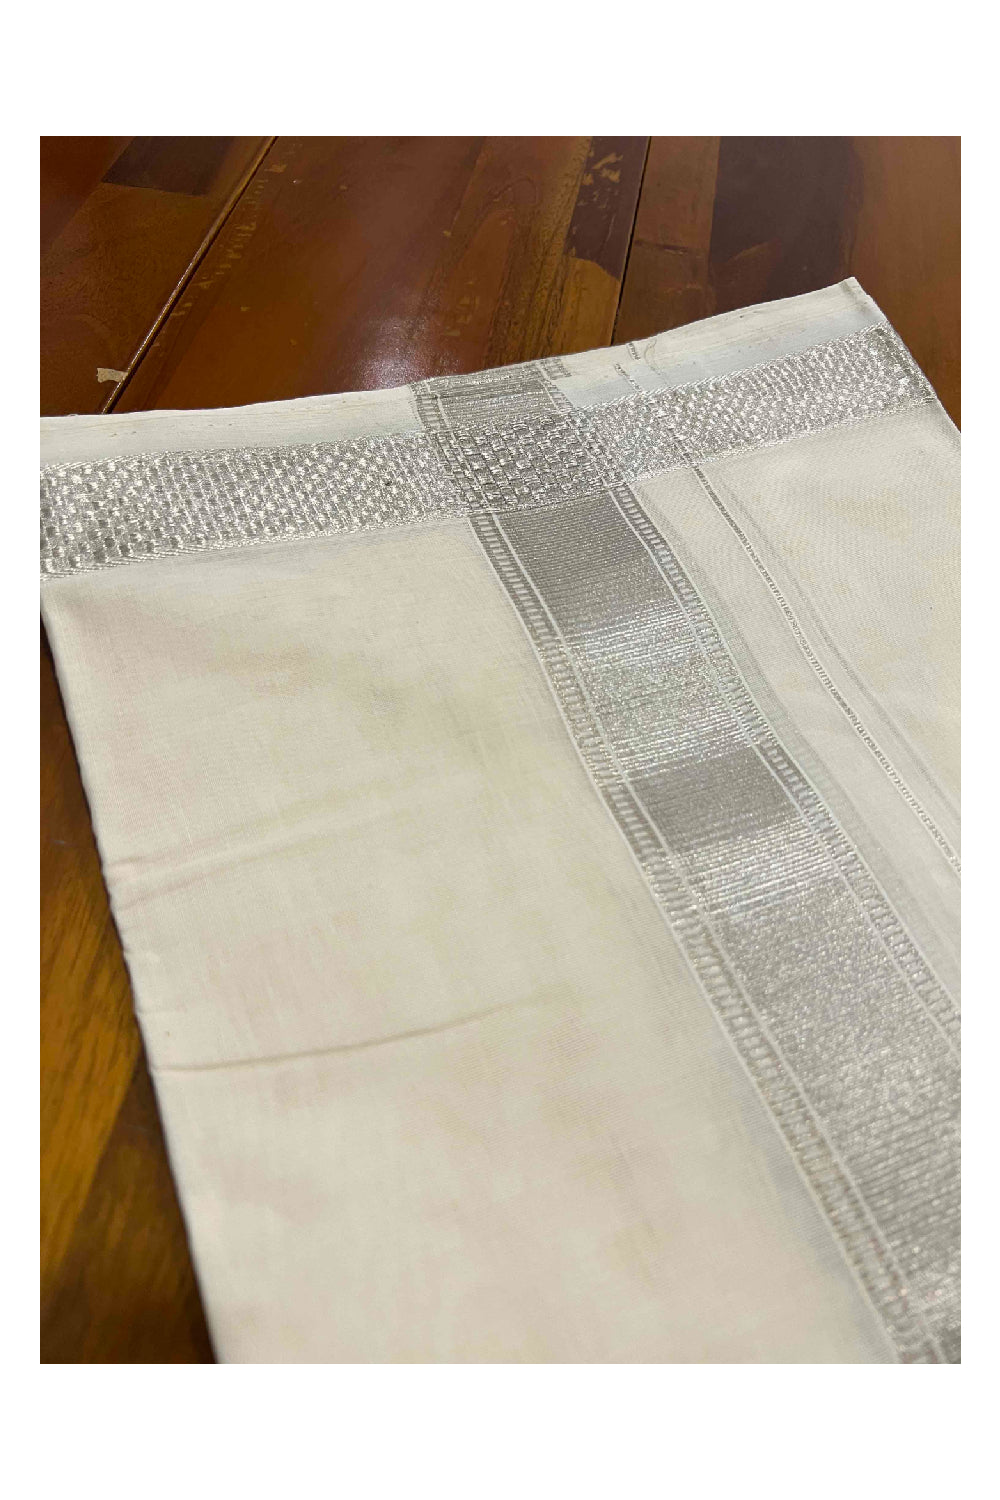 Southloom Balaramapuram Handloom Pure Cotton Mundu with Silver Kasavu Design Kara (South Indian Dhoti)